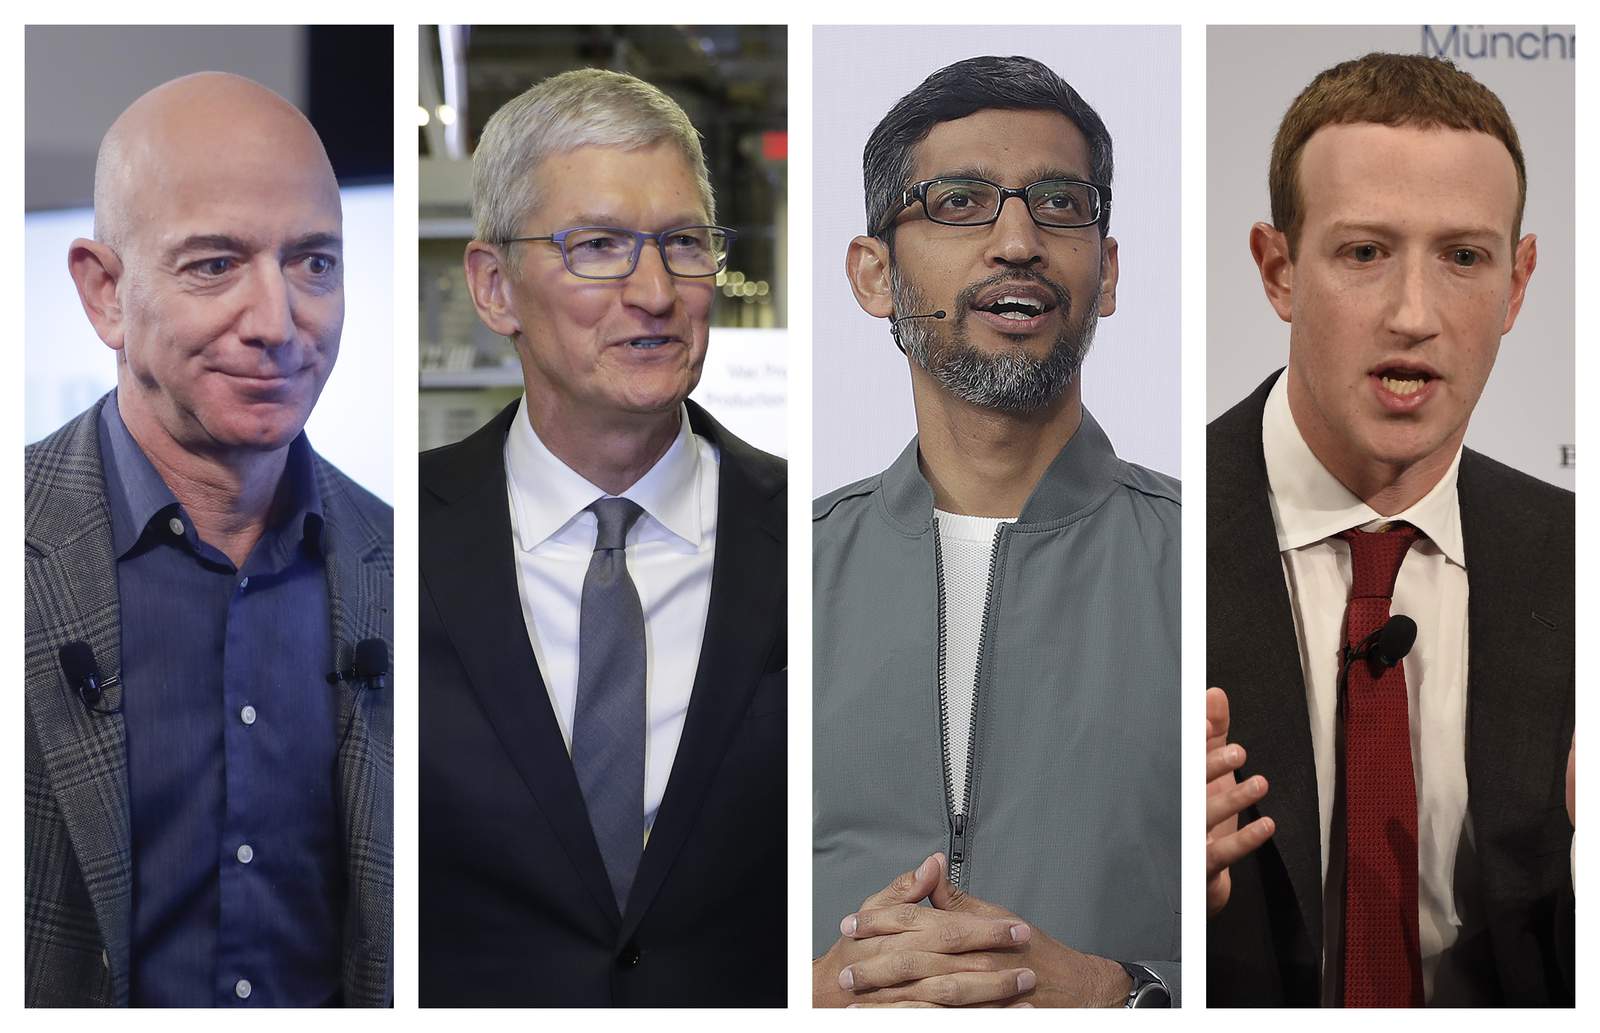 LIVE STREAM: Tech CEOs, Zuckerberg, Bezos, Pichai, Cook, testify before House